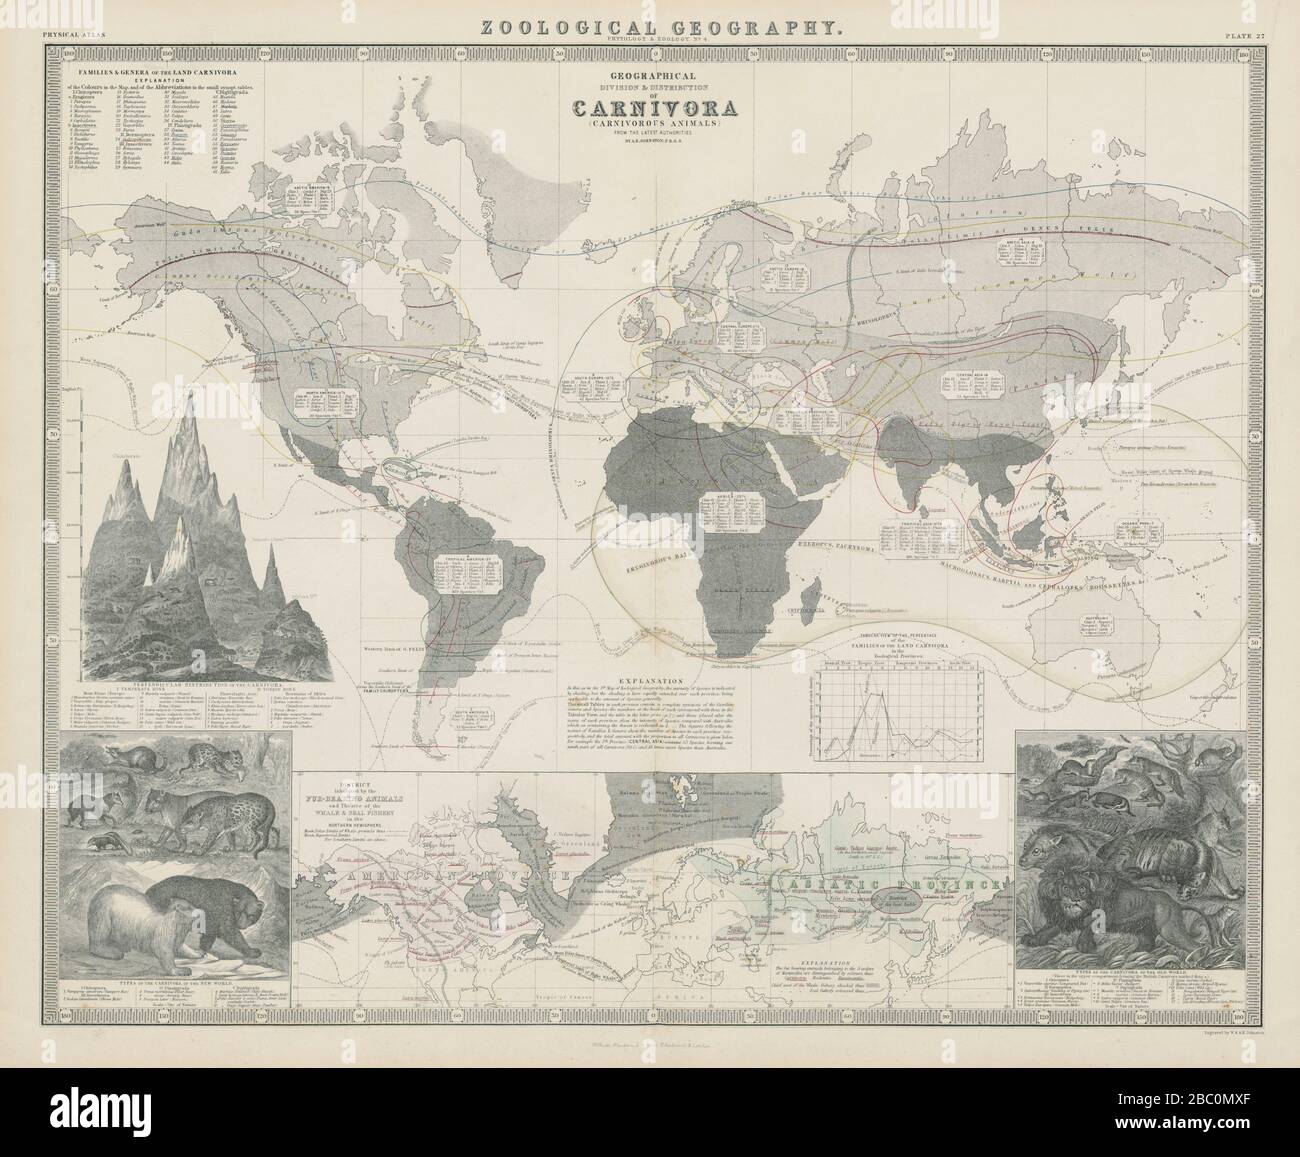 Zoological Geography. Carnivora (Carnivorous Animals) distribution 1856 map Stock Photo